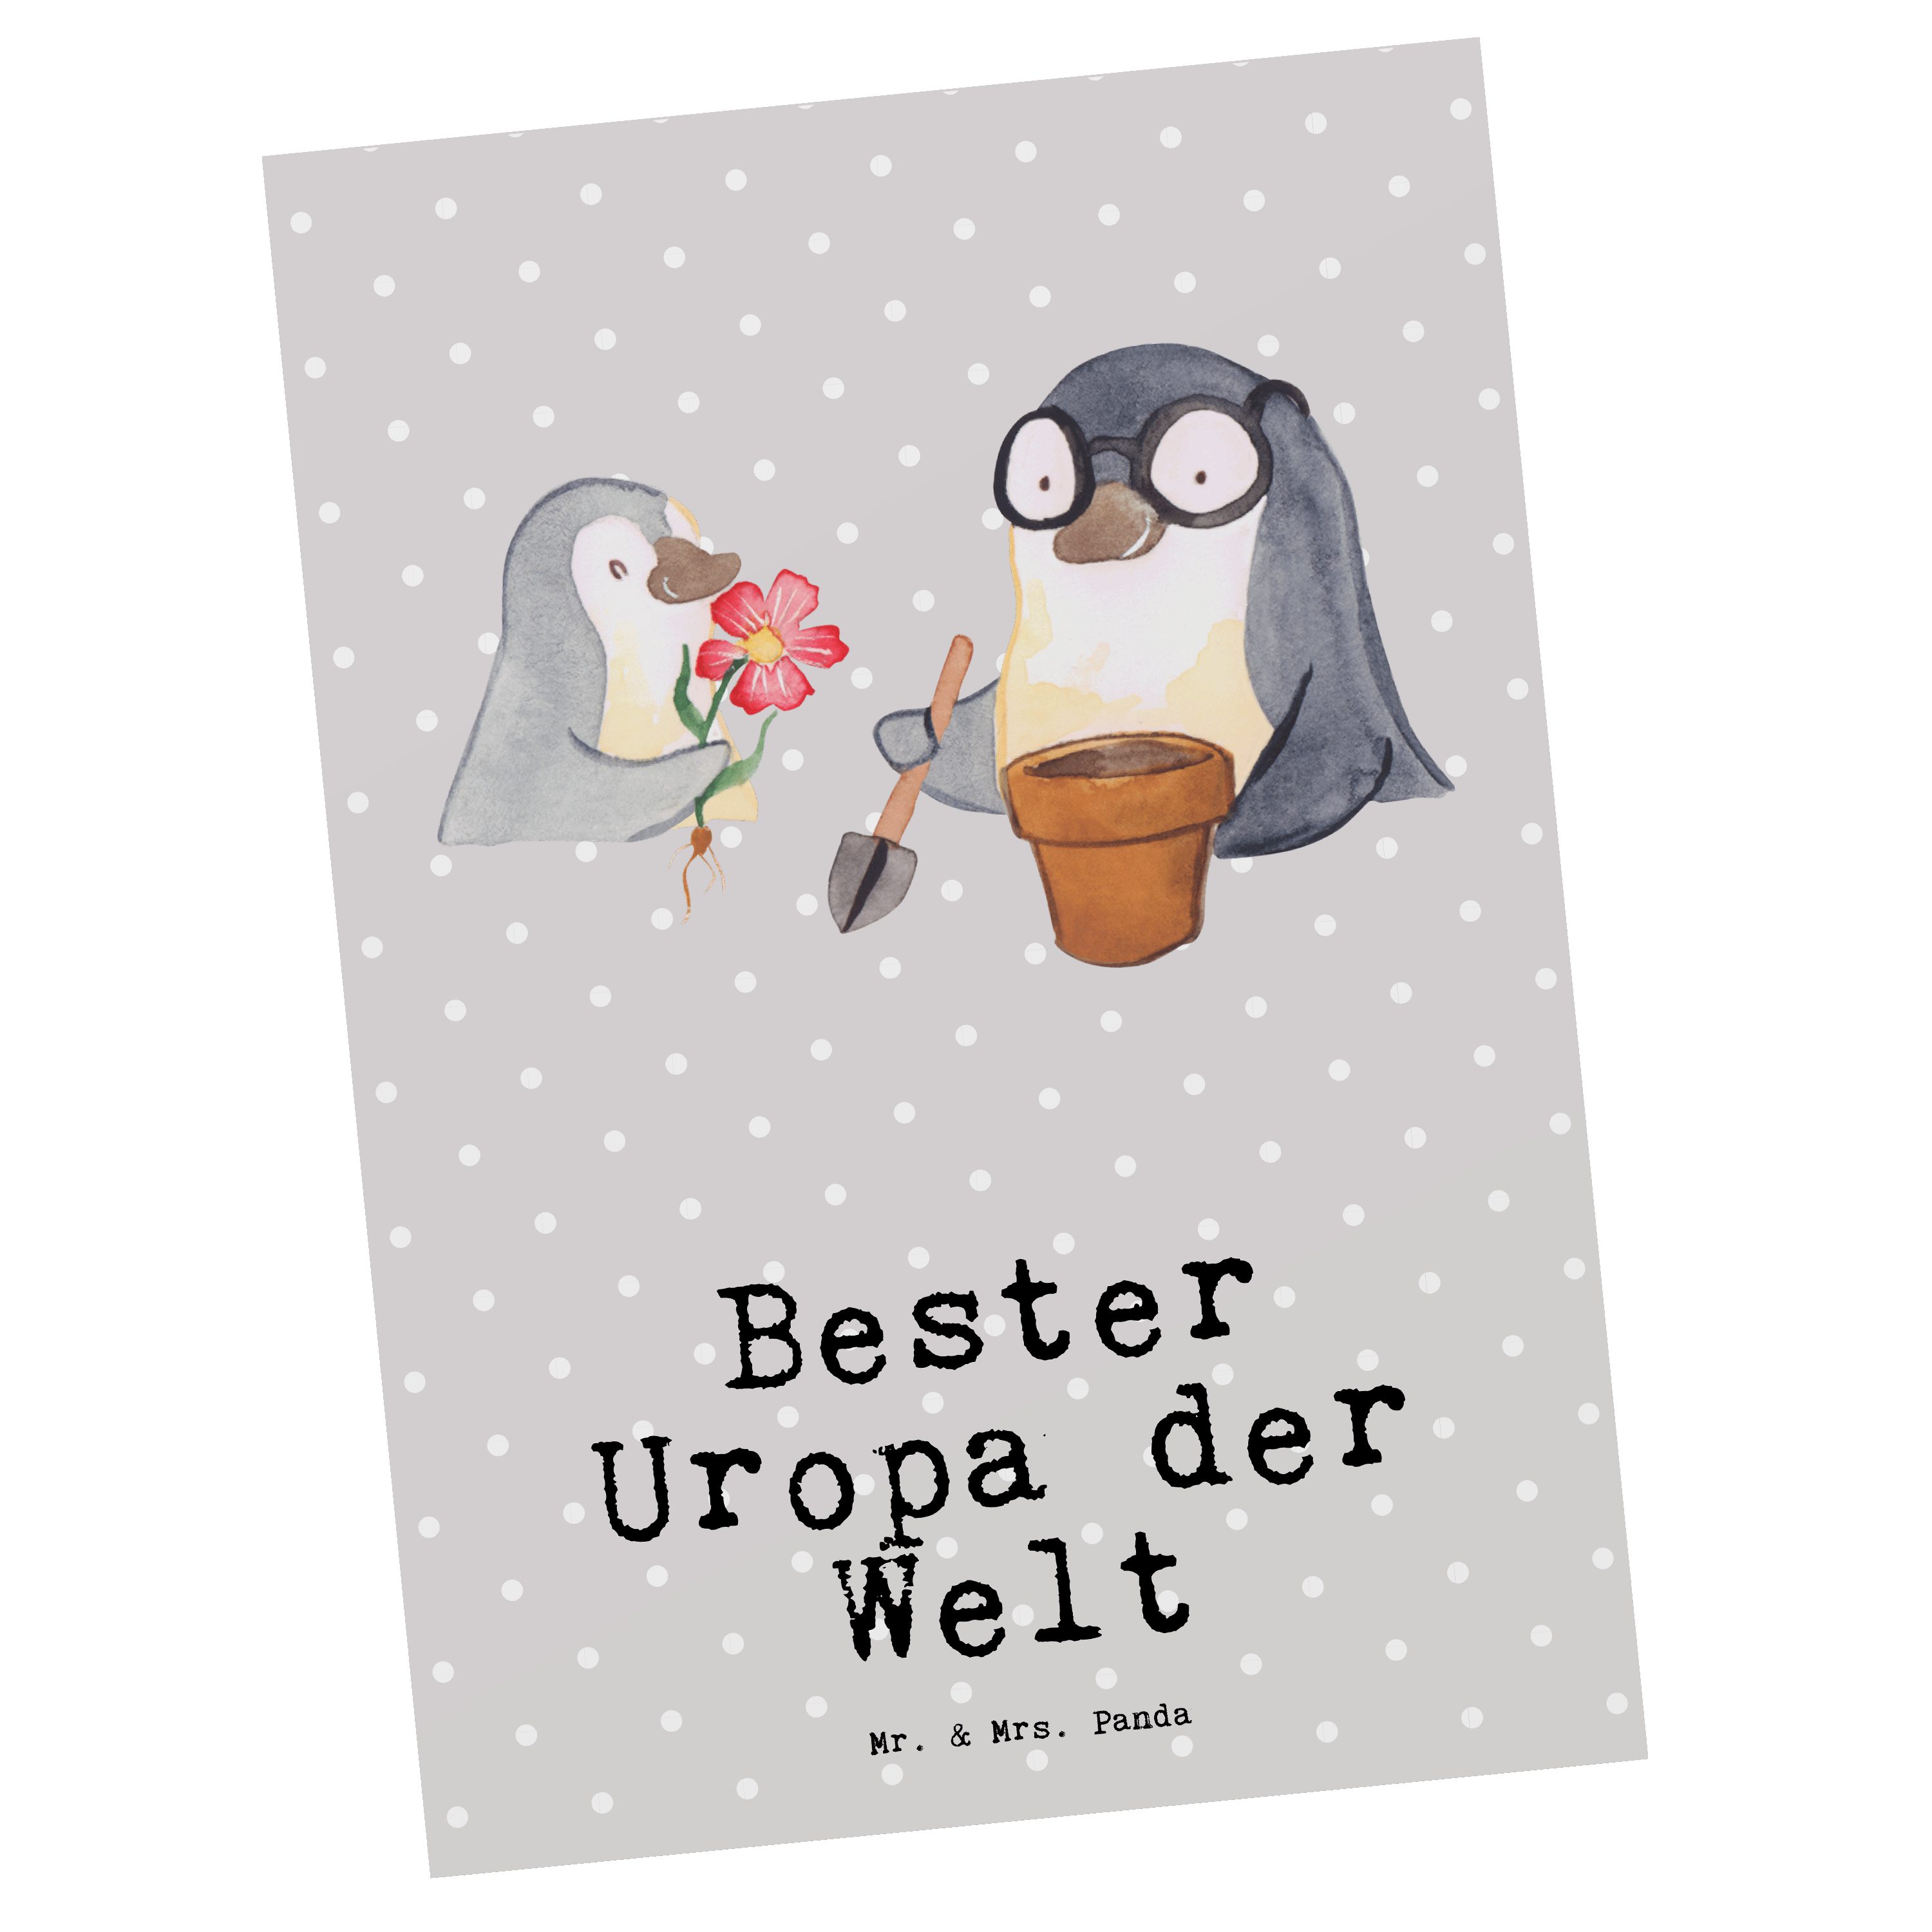 Mr. & Mrs. Panda Postkarte Pinguin Bester Uropa der Welt - Grau Pastell - Geschenk, Geburtstagsk